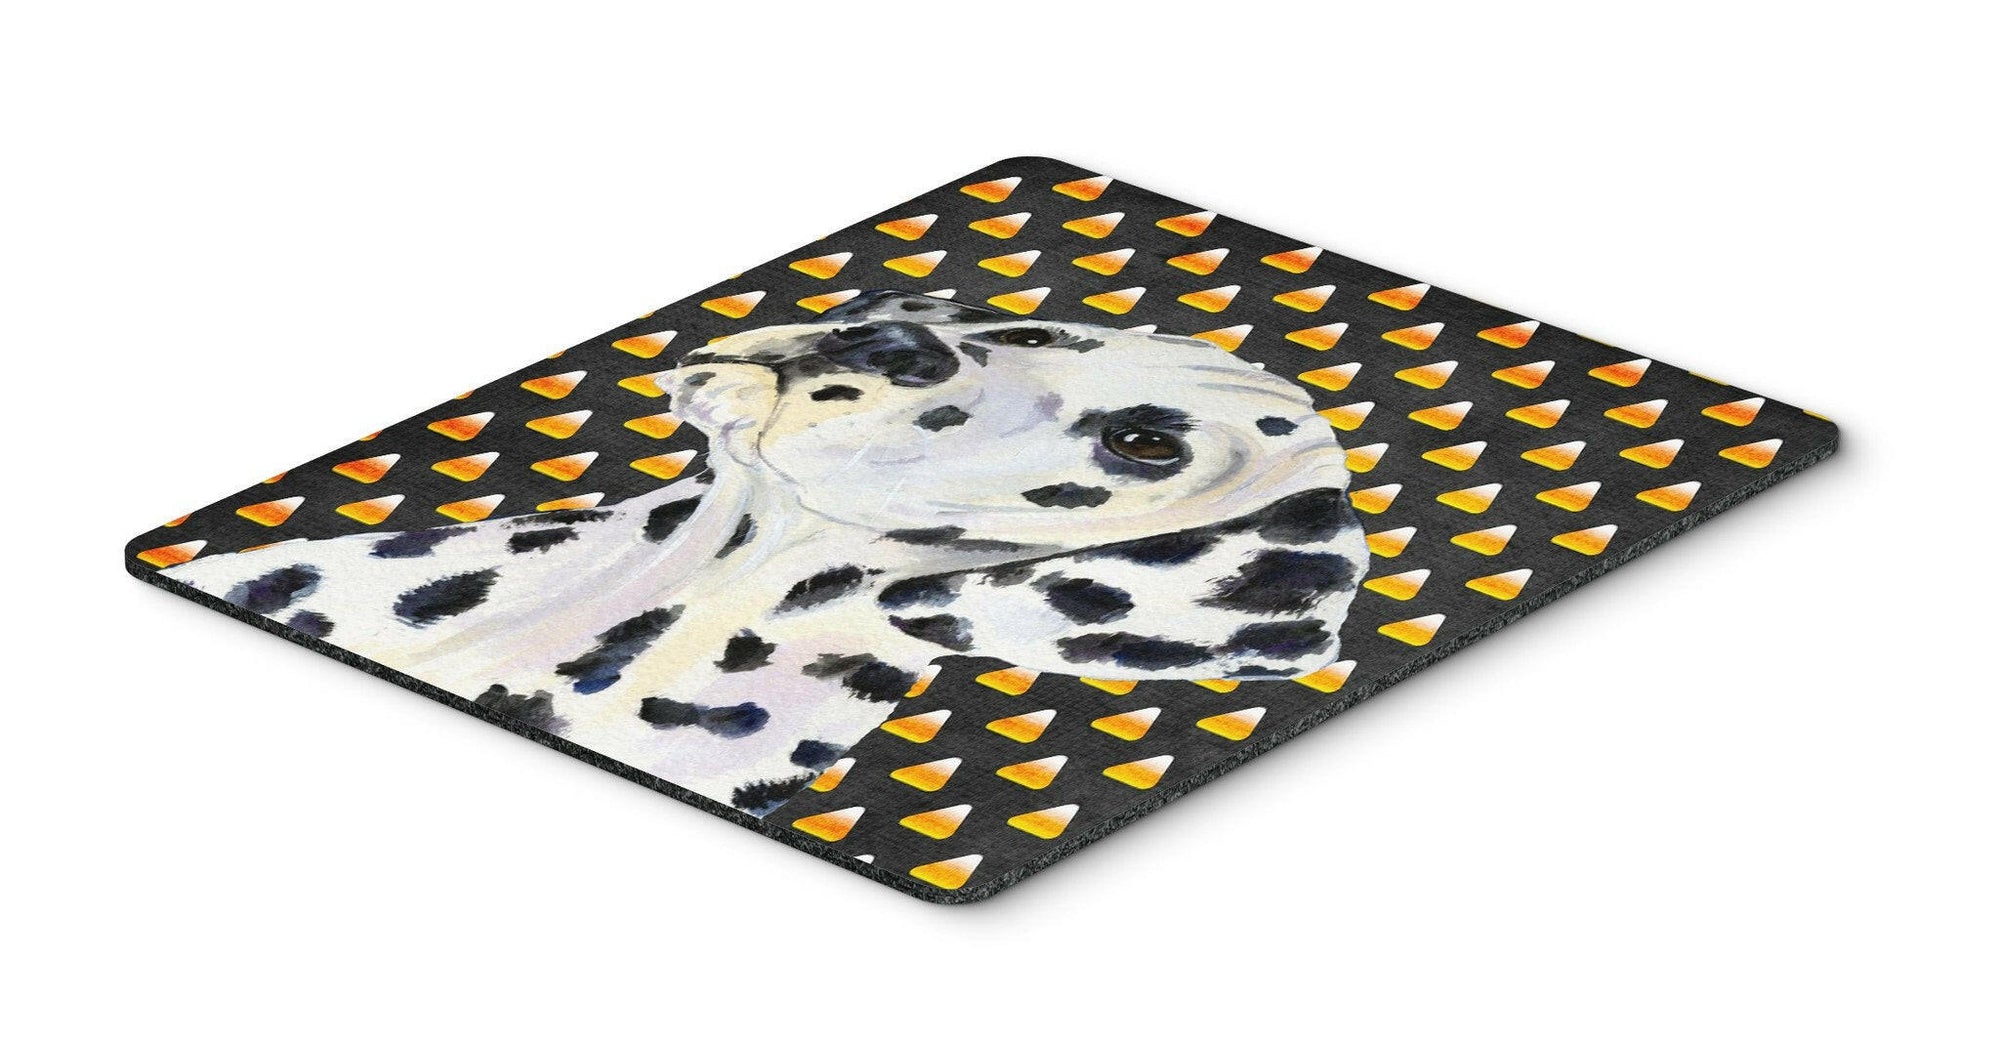 Dalmatian Candy Corn Halloween Portrait Mouse Pad, Hot Pad or Trivet by Caroline's Treasures